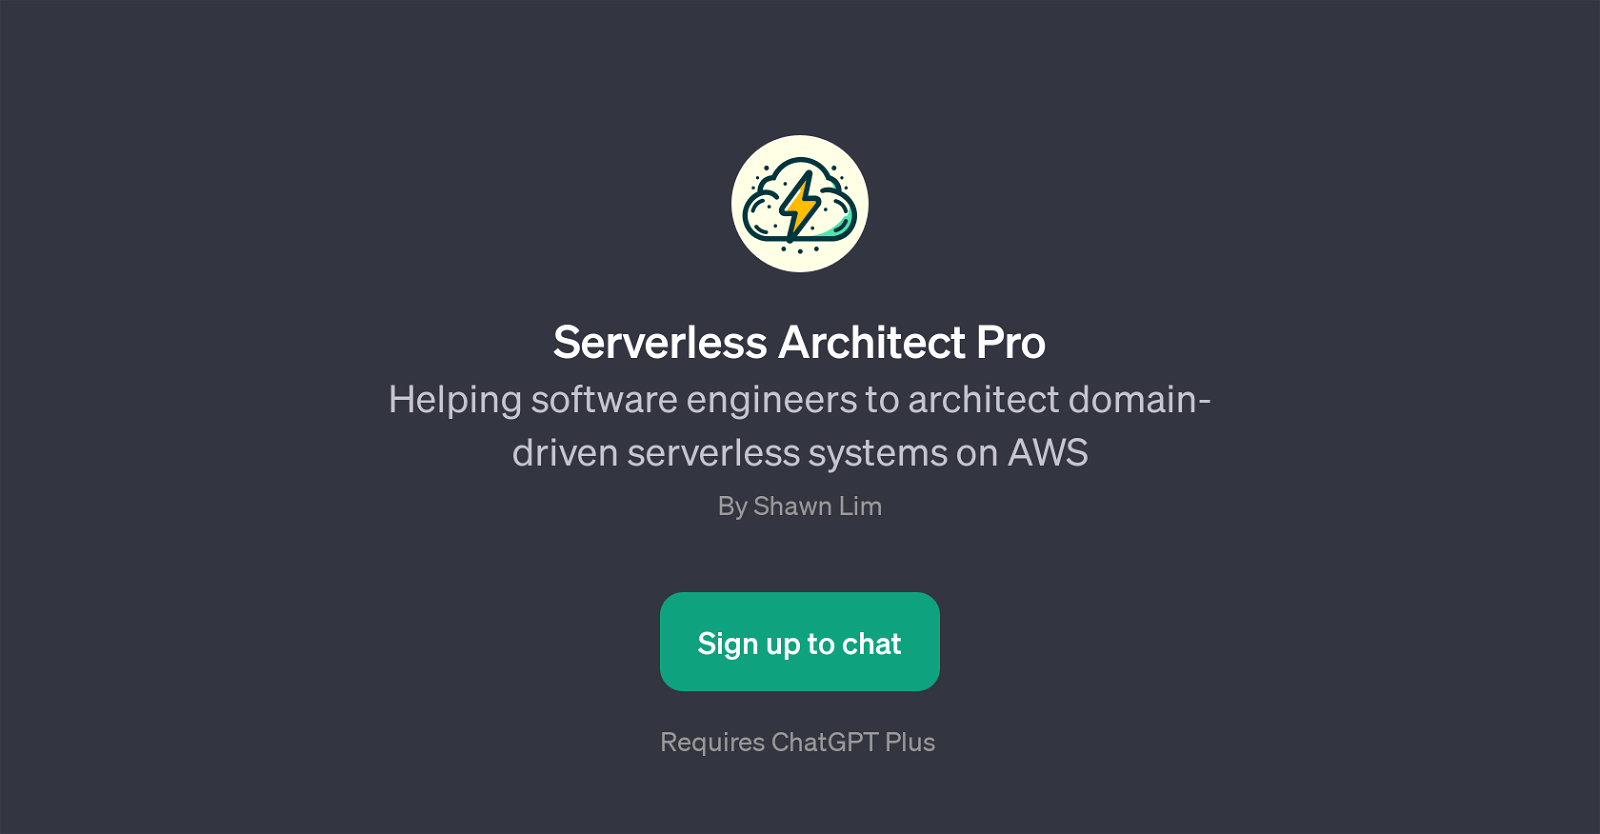 Serverless Architect Pro website